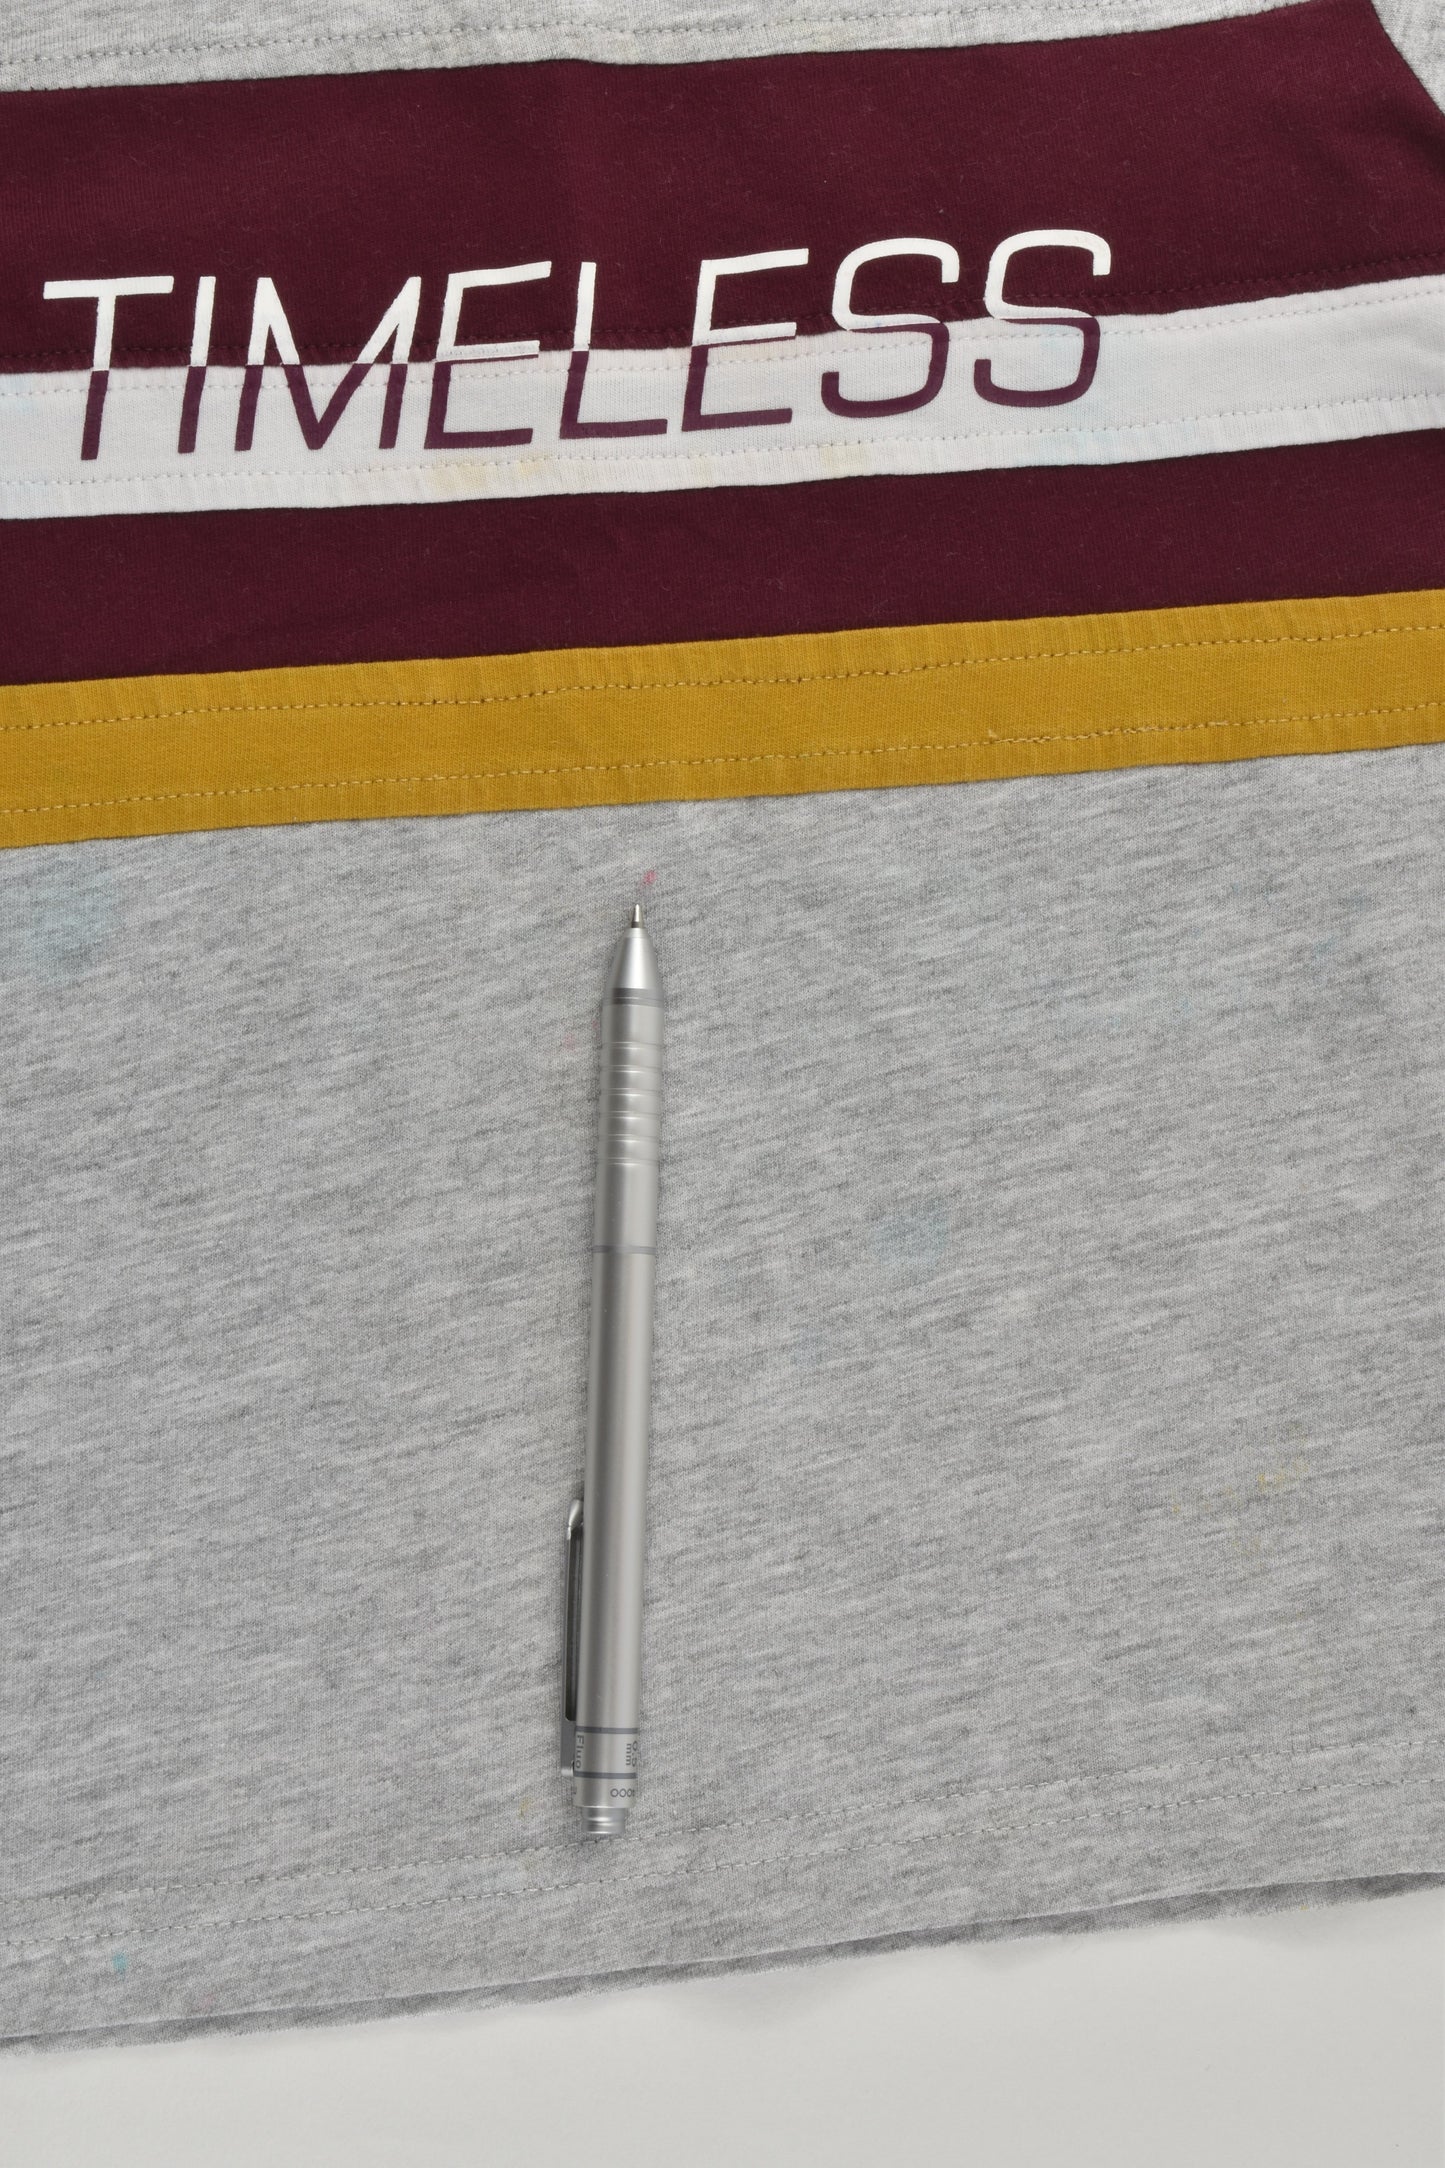 M&S Size 3-4 (104 cm) 'Timeless' T-shirt